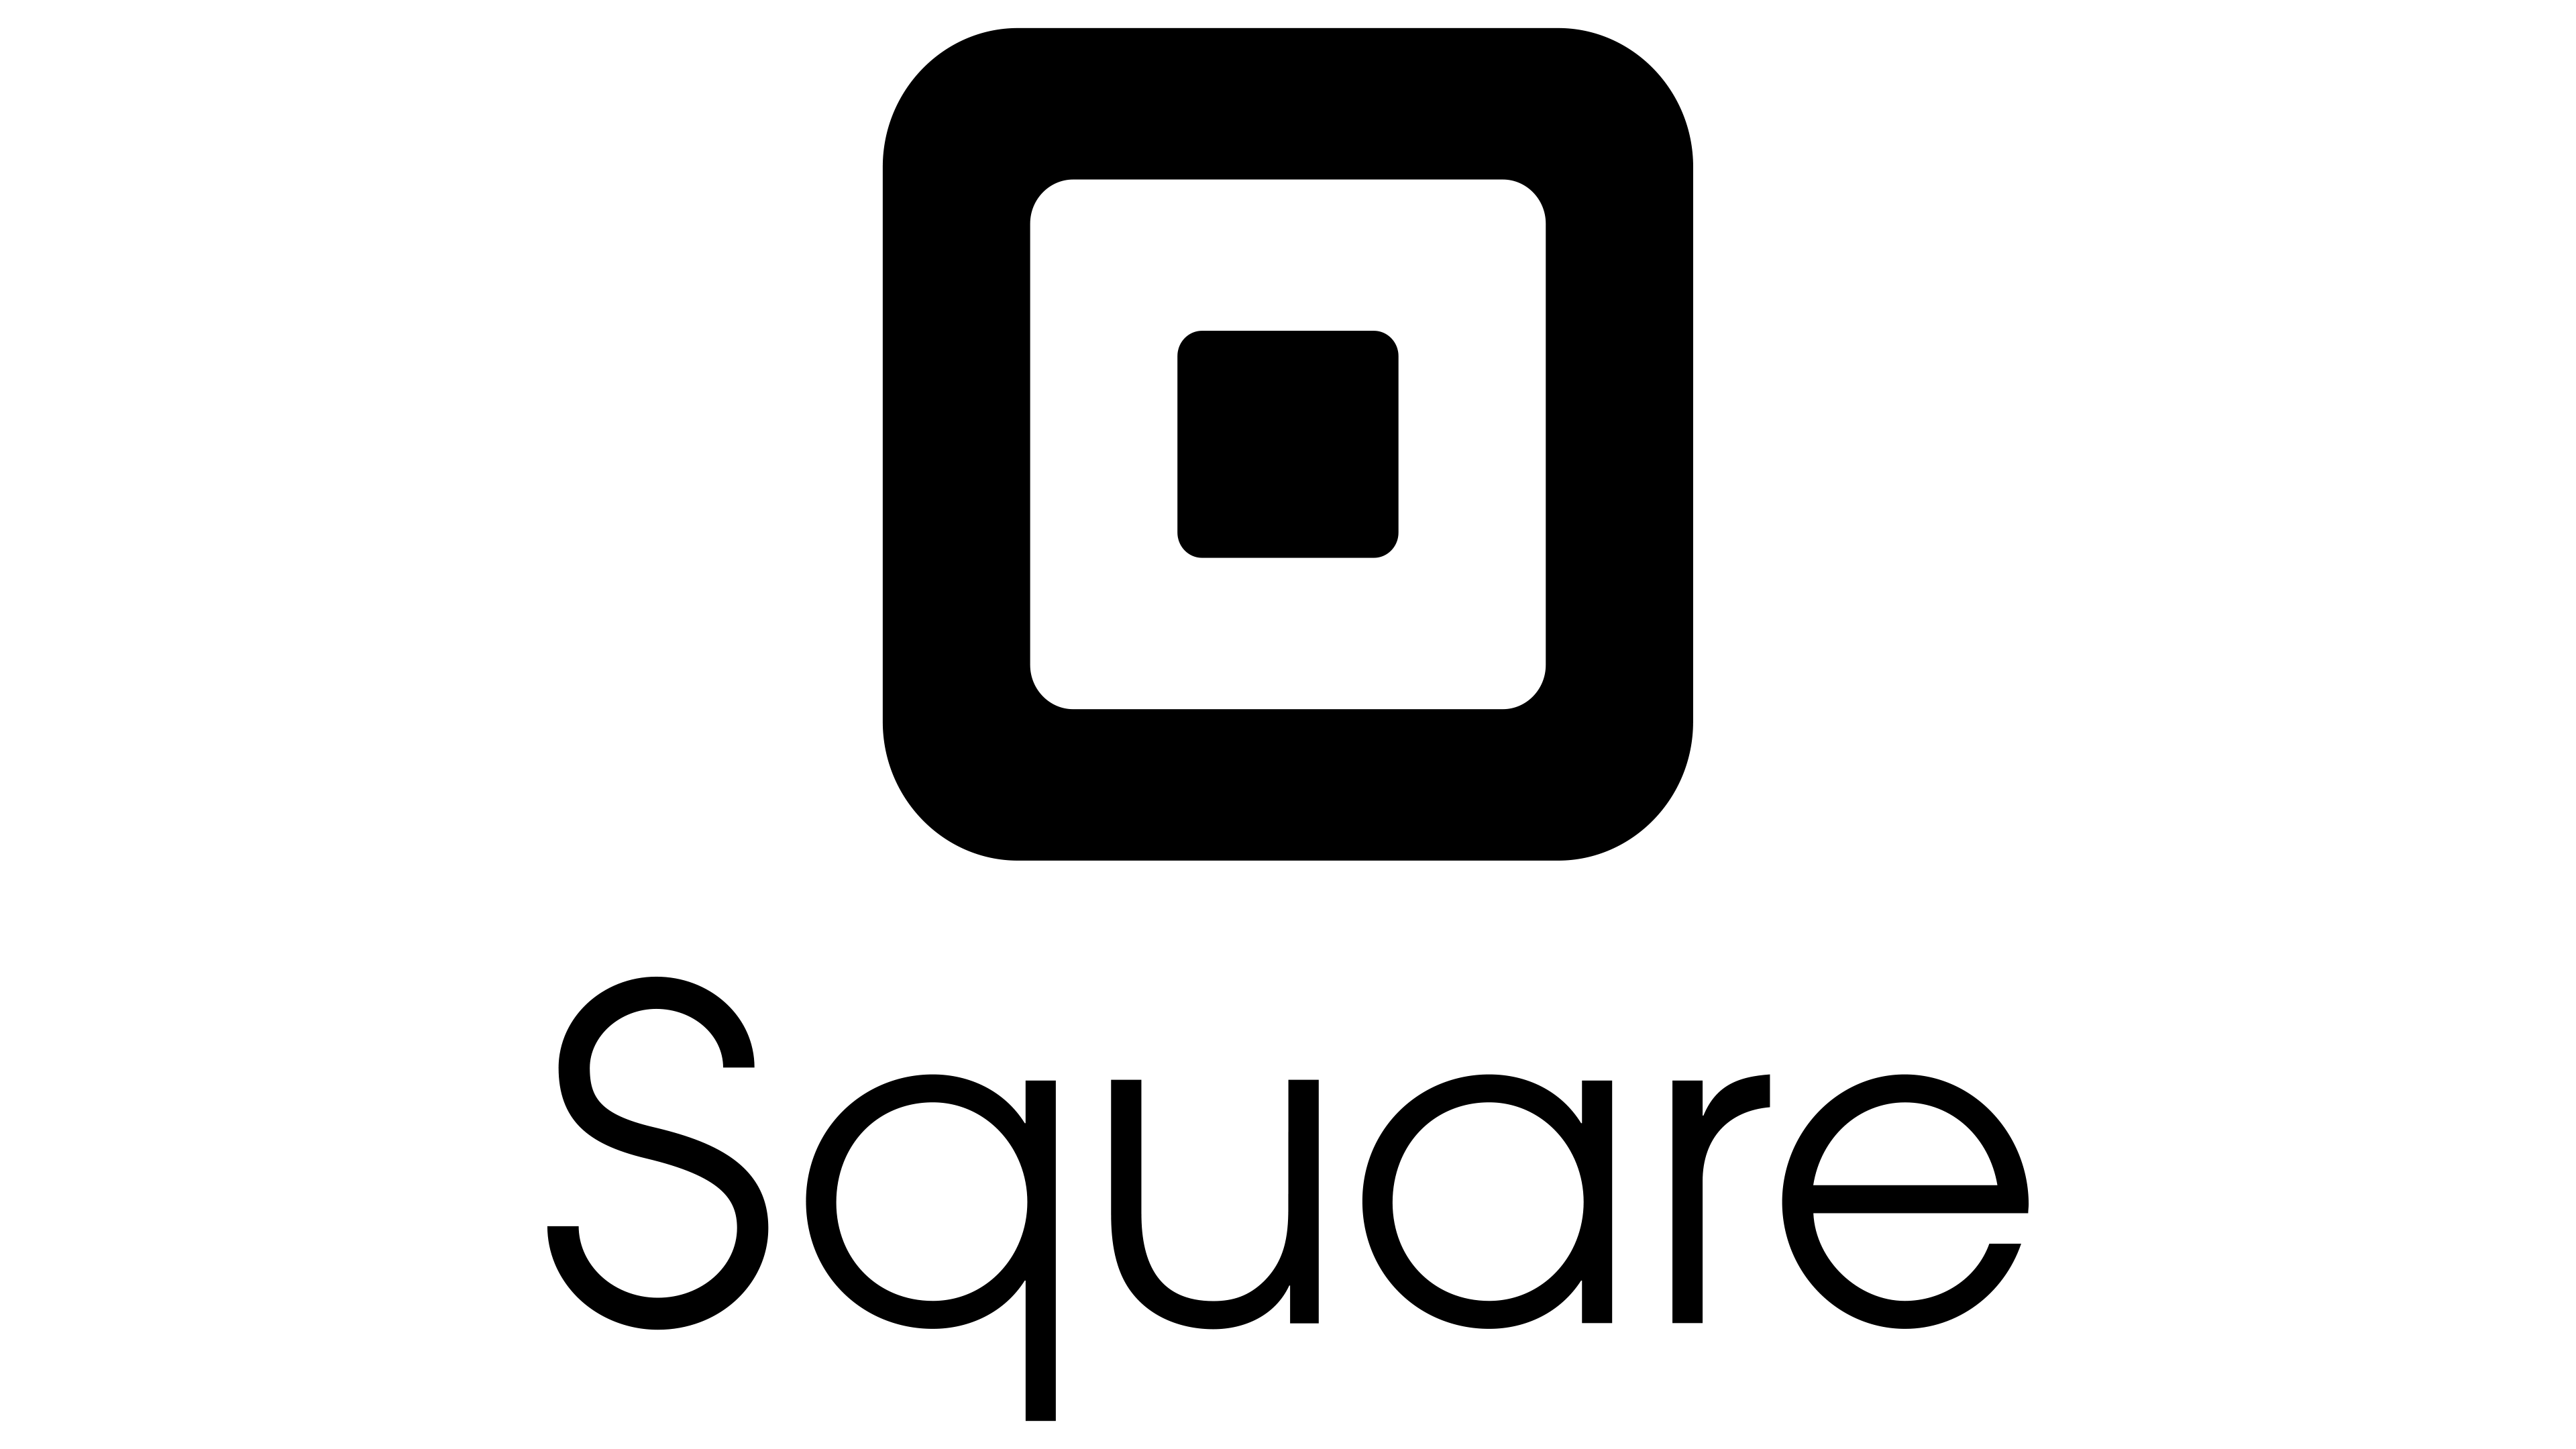 Square-Logo